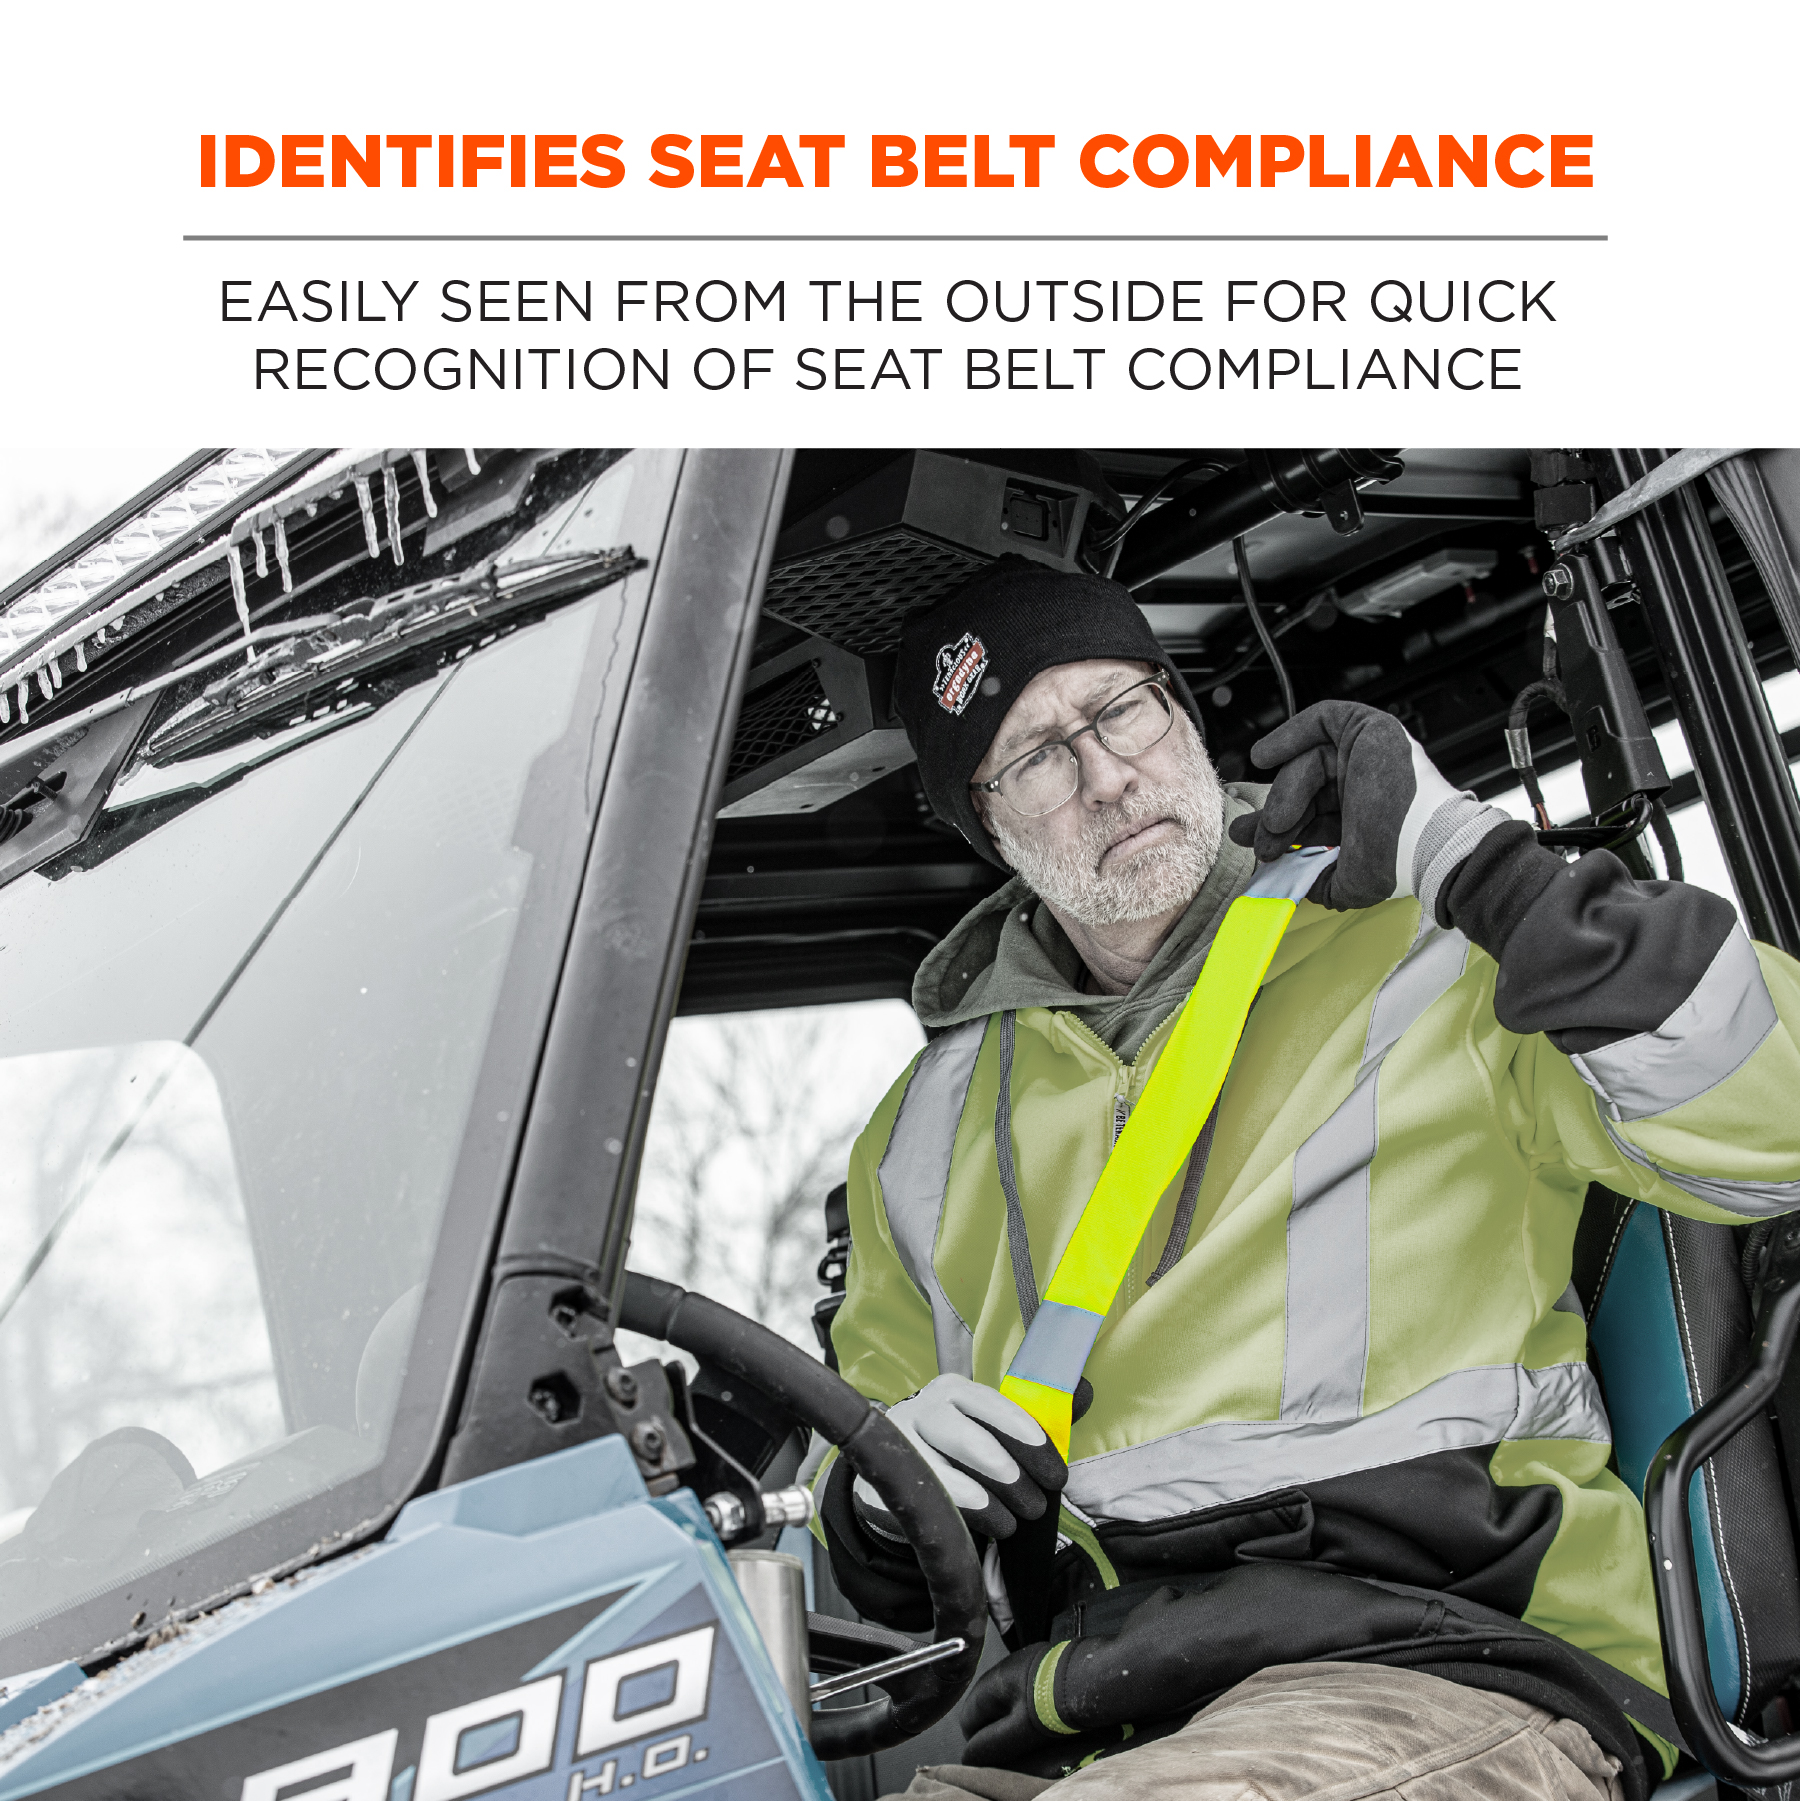 https://www.ergodyne.com/sites/default/files/product-images/29043-8004-hi-vis-seat-belt-cover-lime-identifies-seat-belt-compliance.jpg